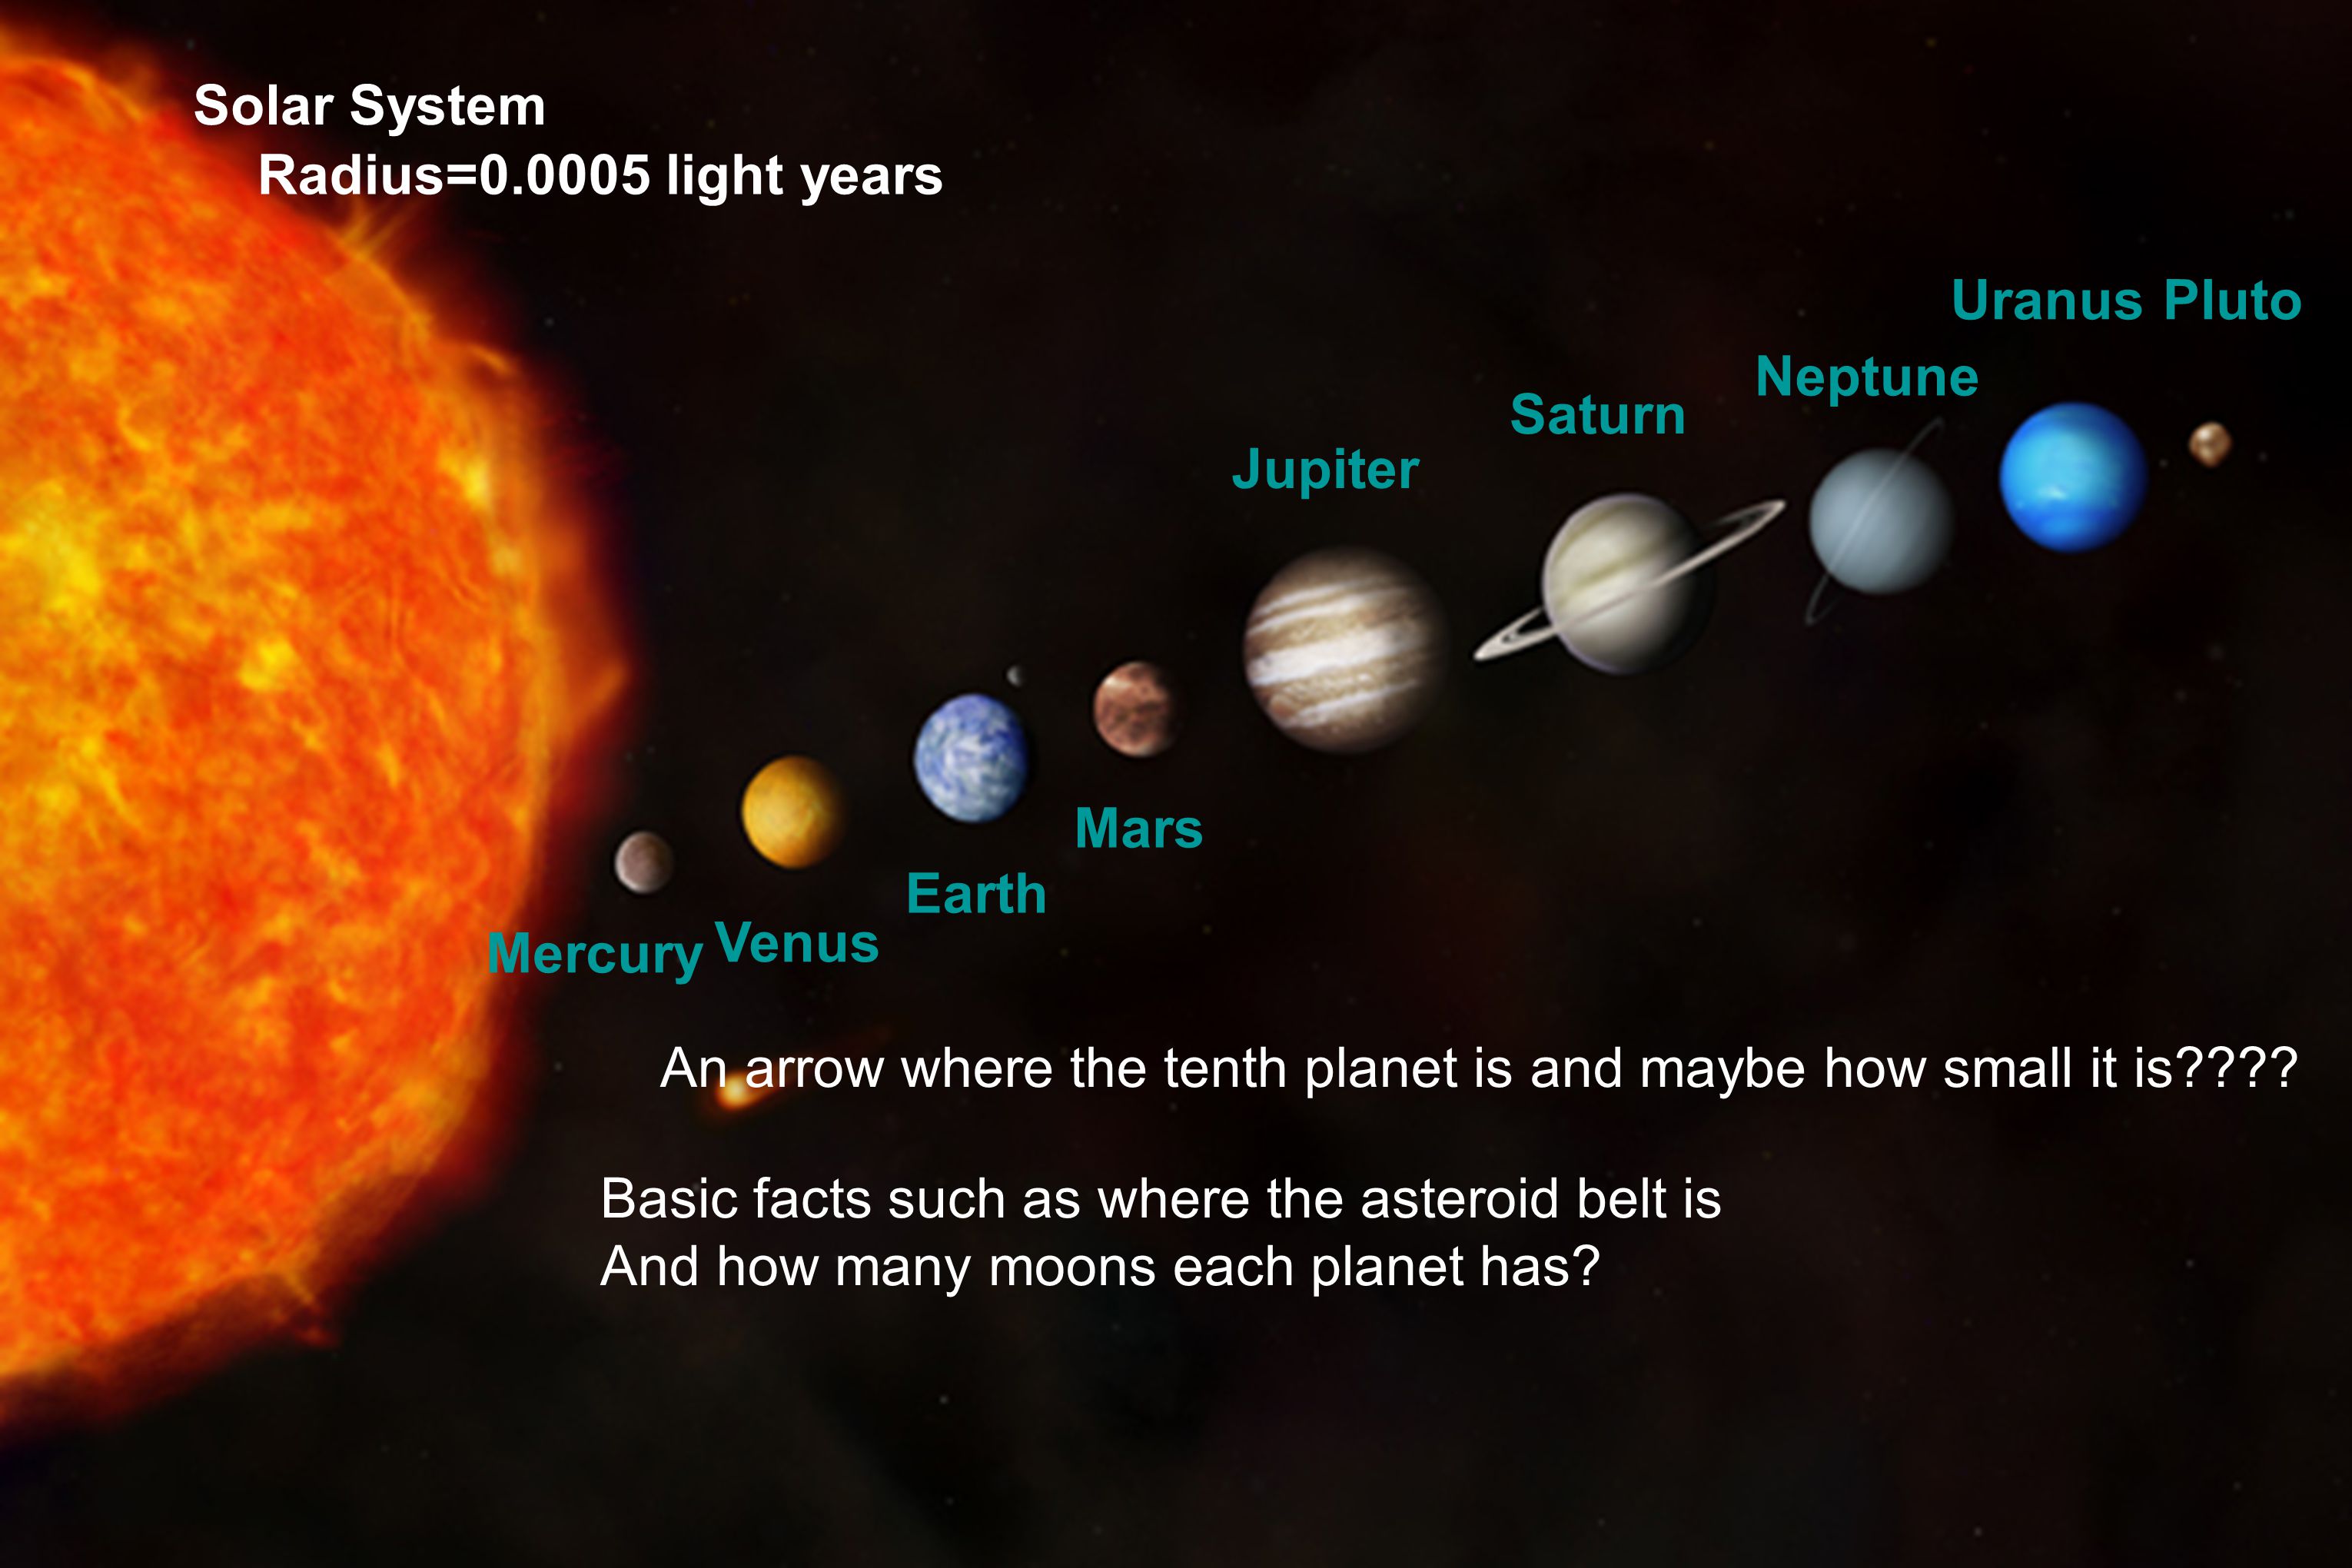 Mercury Venus Earth Mars Jupiter Saturn Uranus Neptune Pluto Solar System Radius= light years An arrow where the tenth planet is and maybe how small it is .